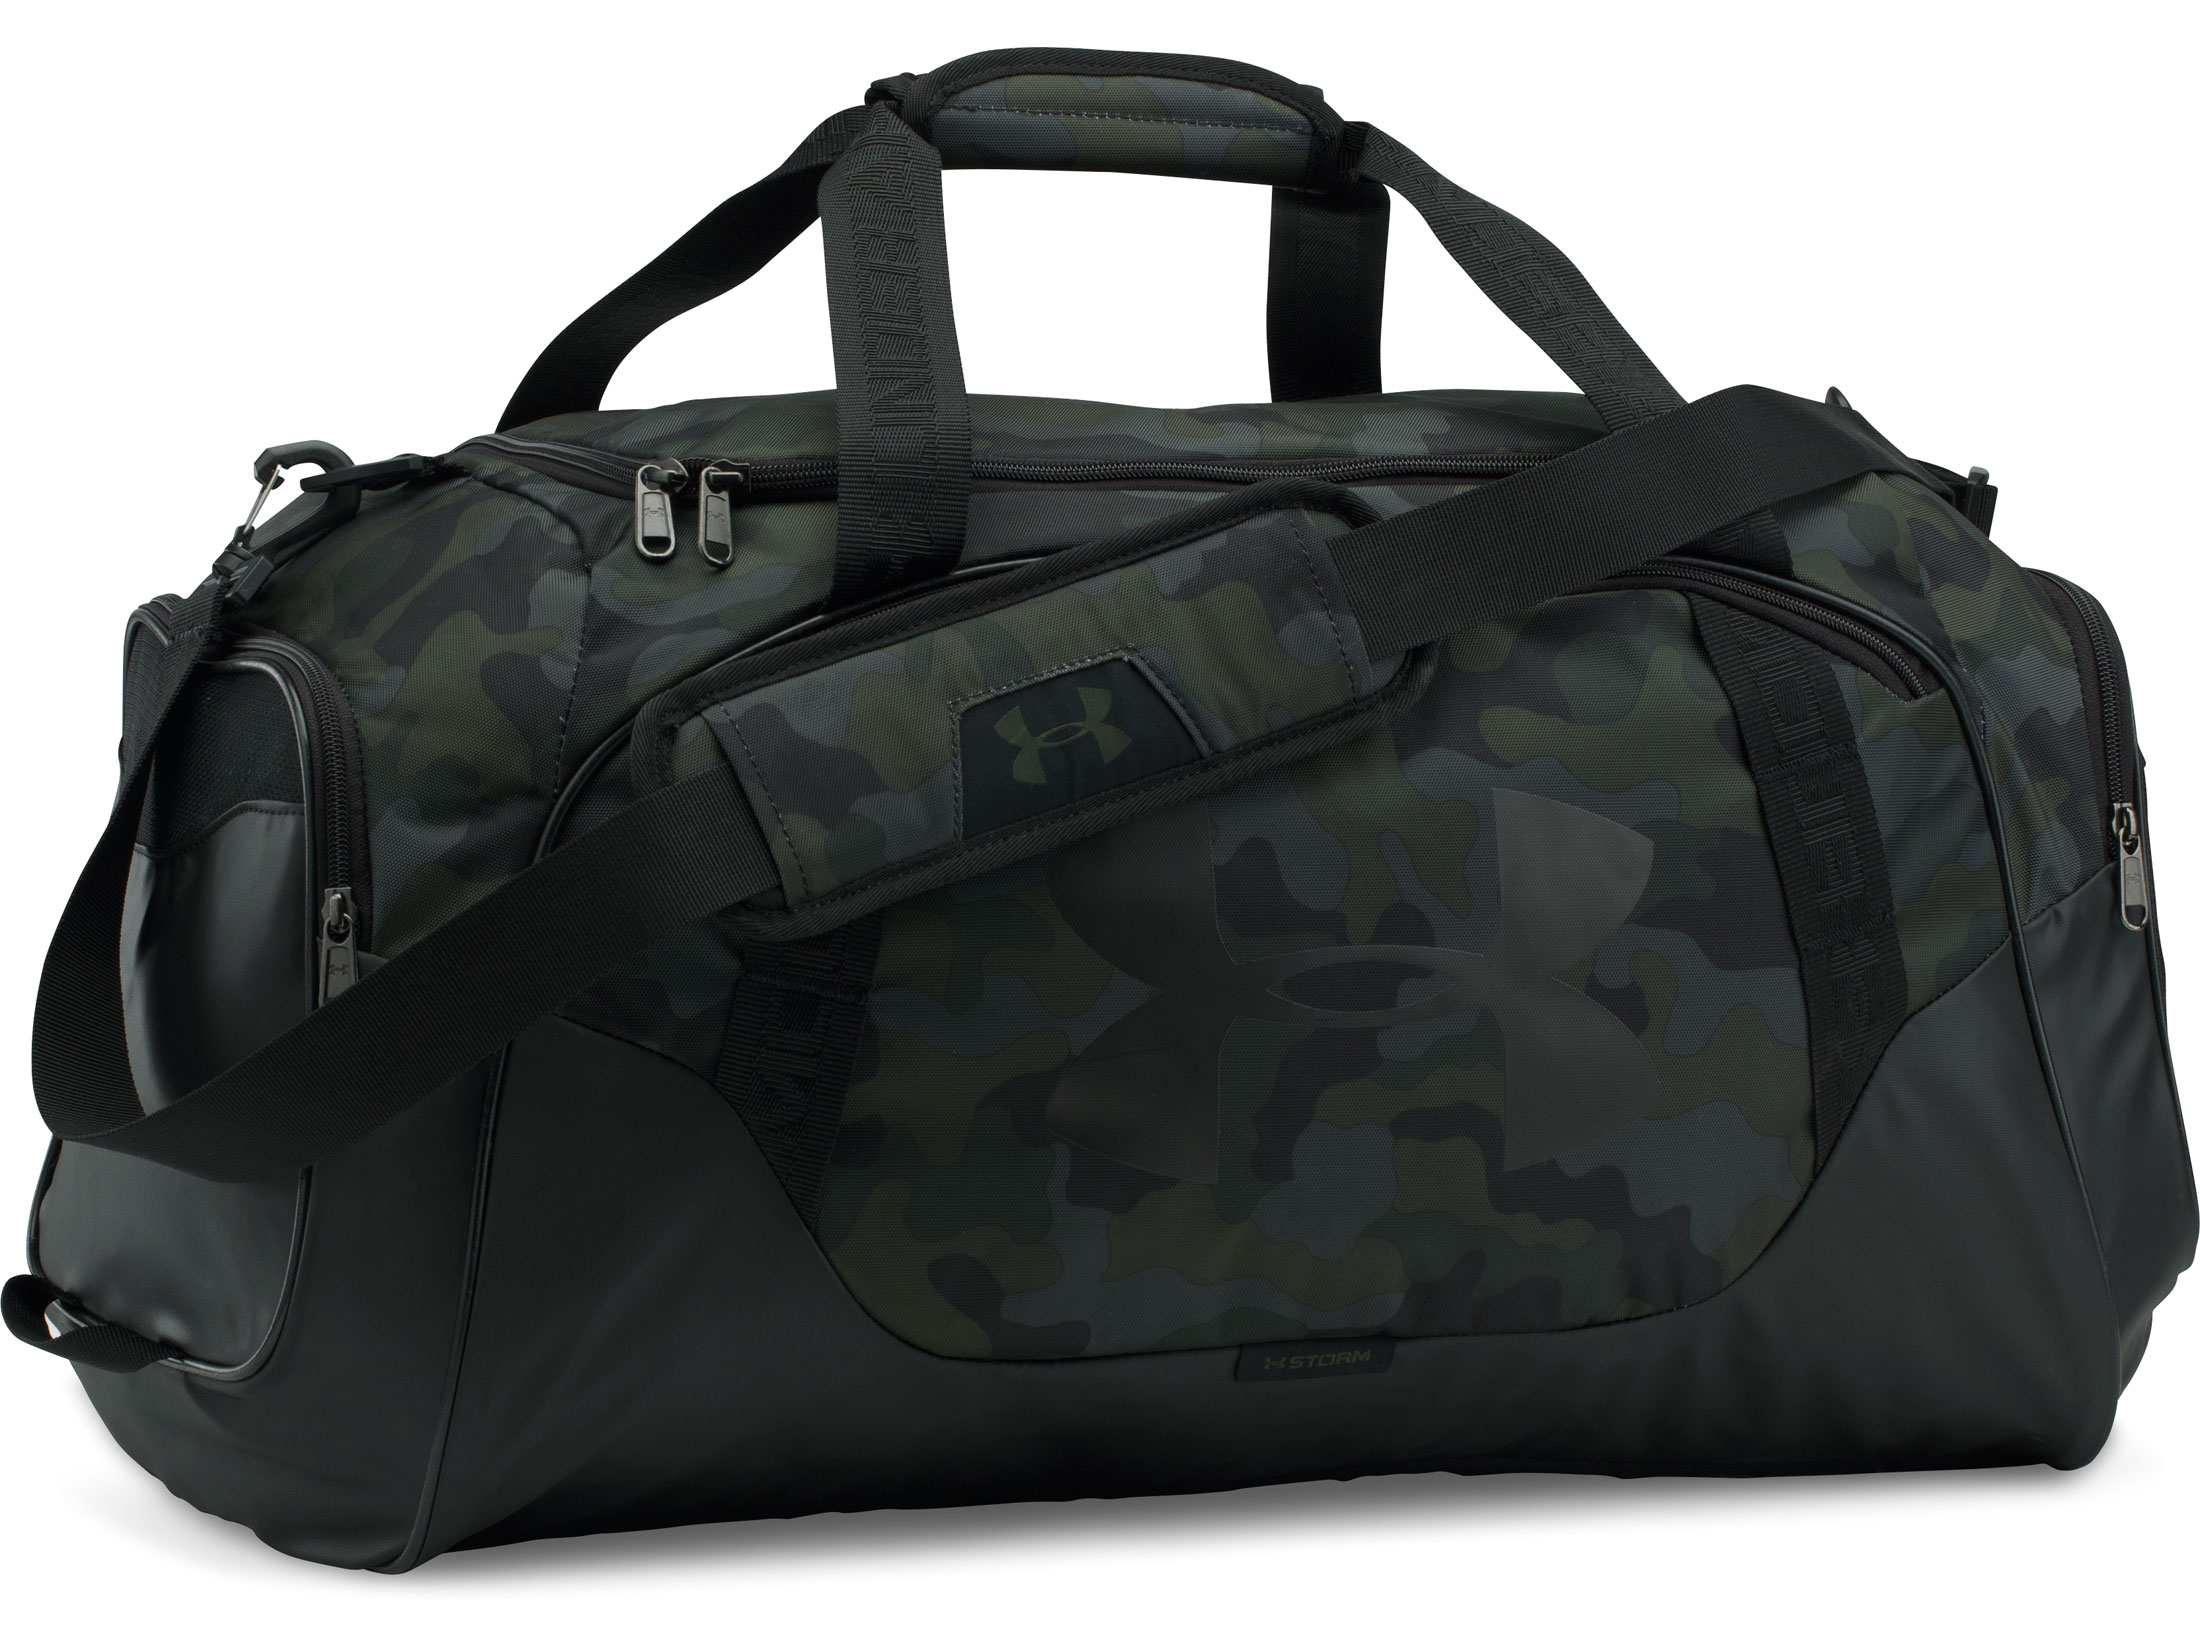 Under Armour Undeniable 3.0 Duffel Bag Small Black Camo